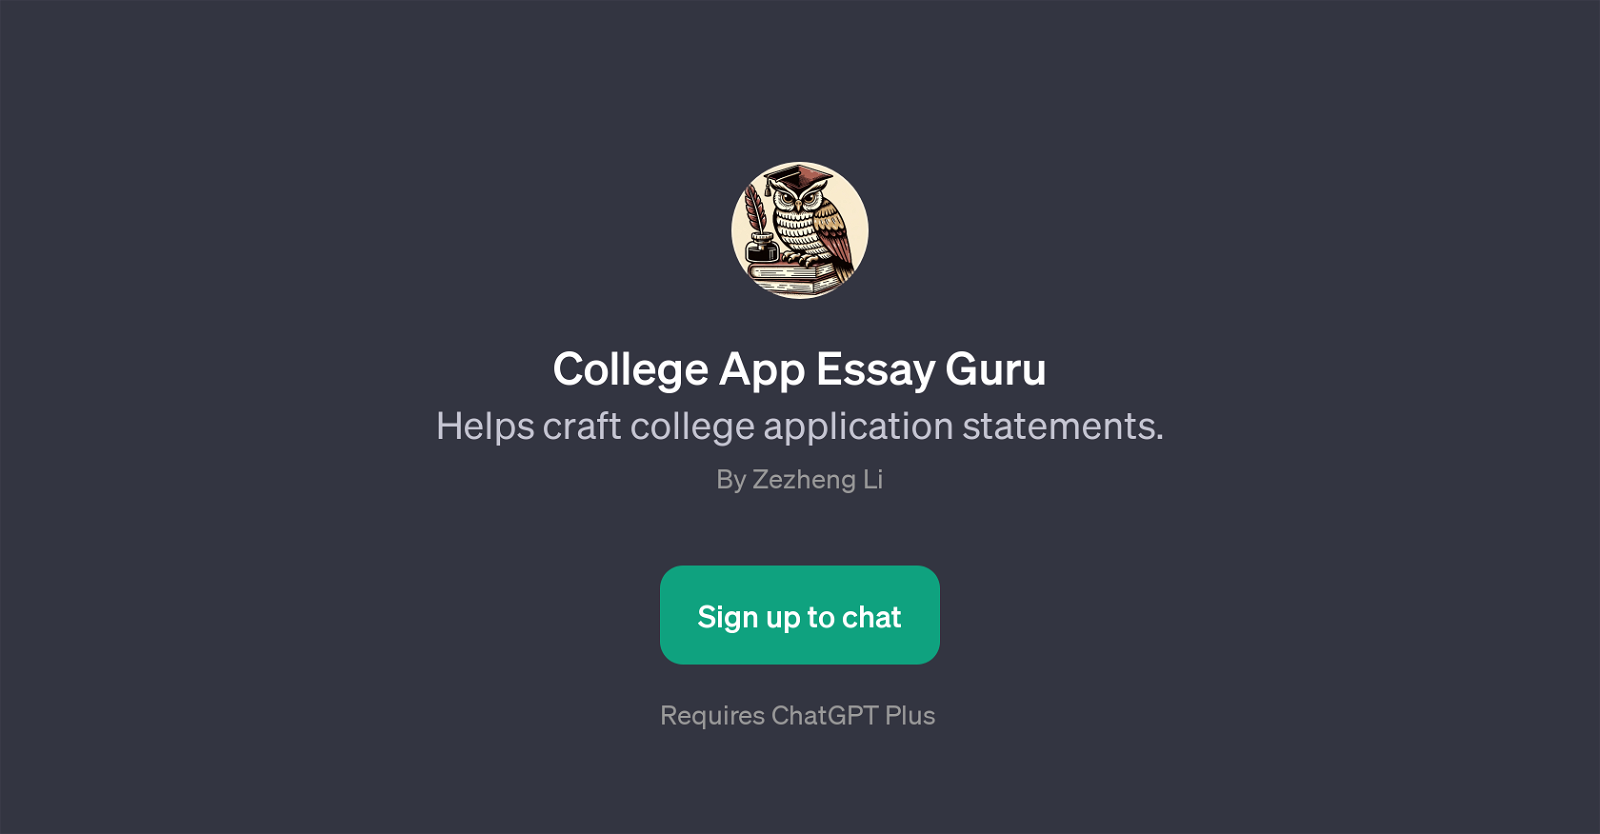 College App Essay Guru website